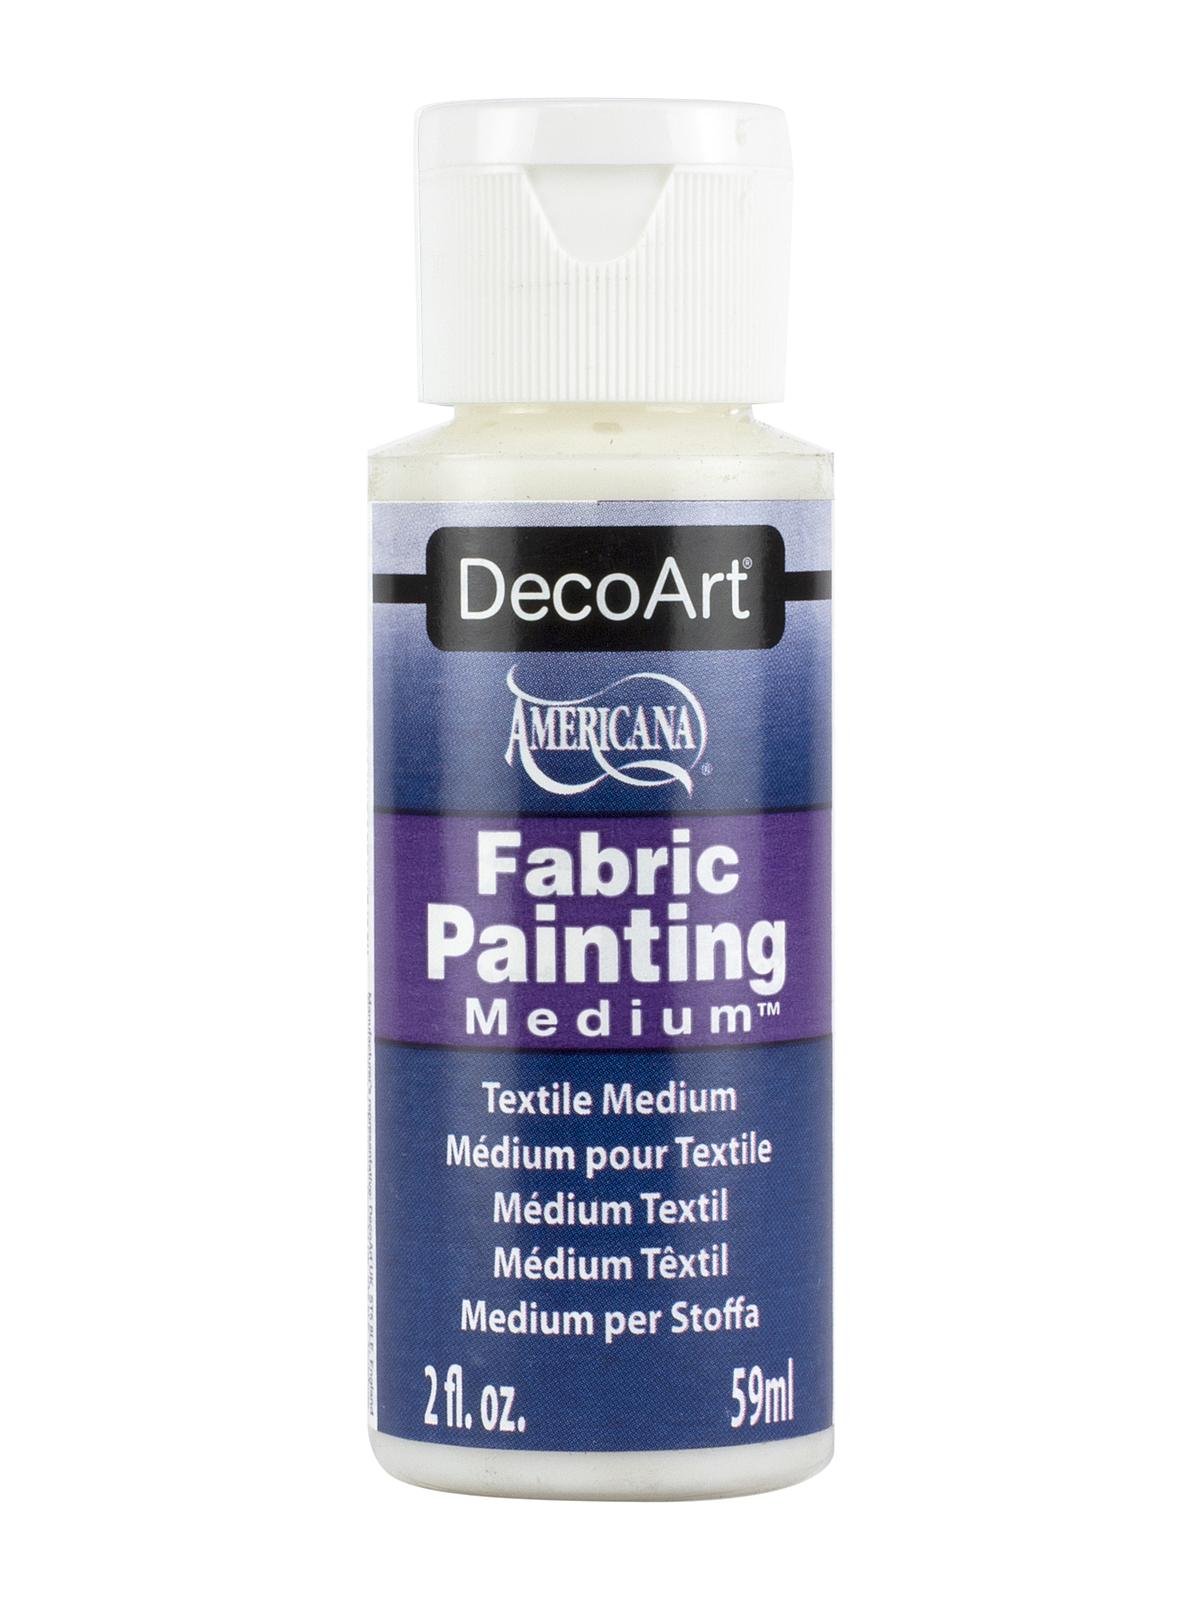 DecoArt, Crafter's Acrylic Paint, Fabric Medium, 2oz